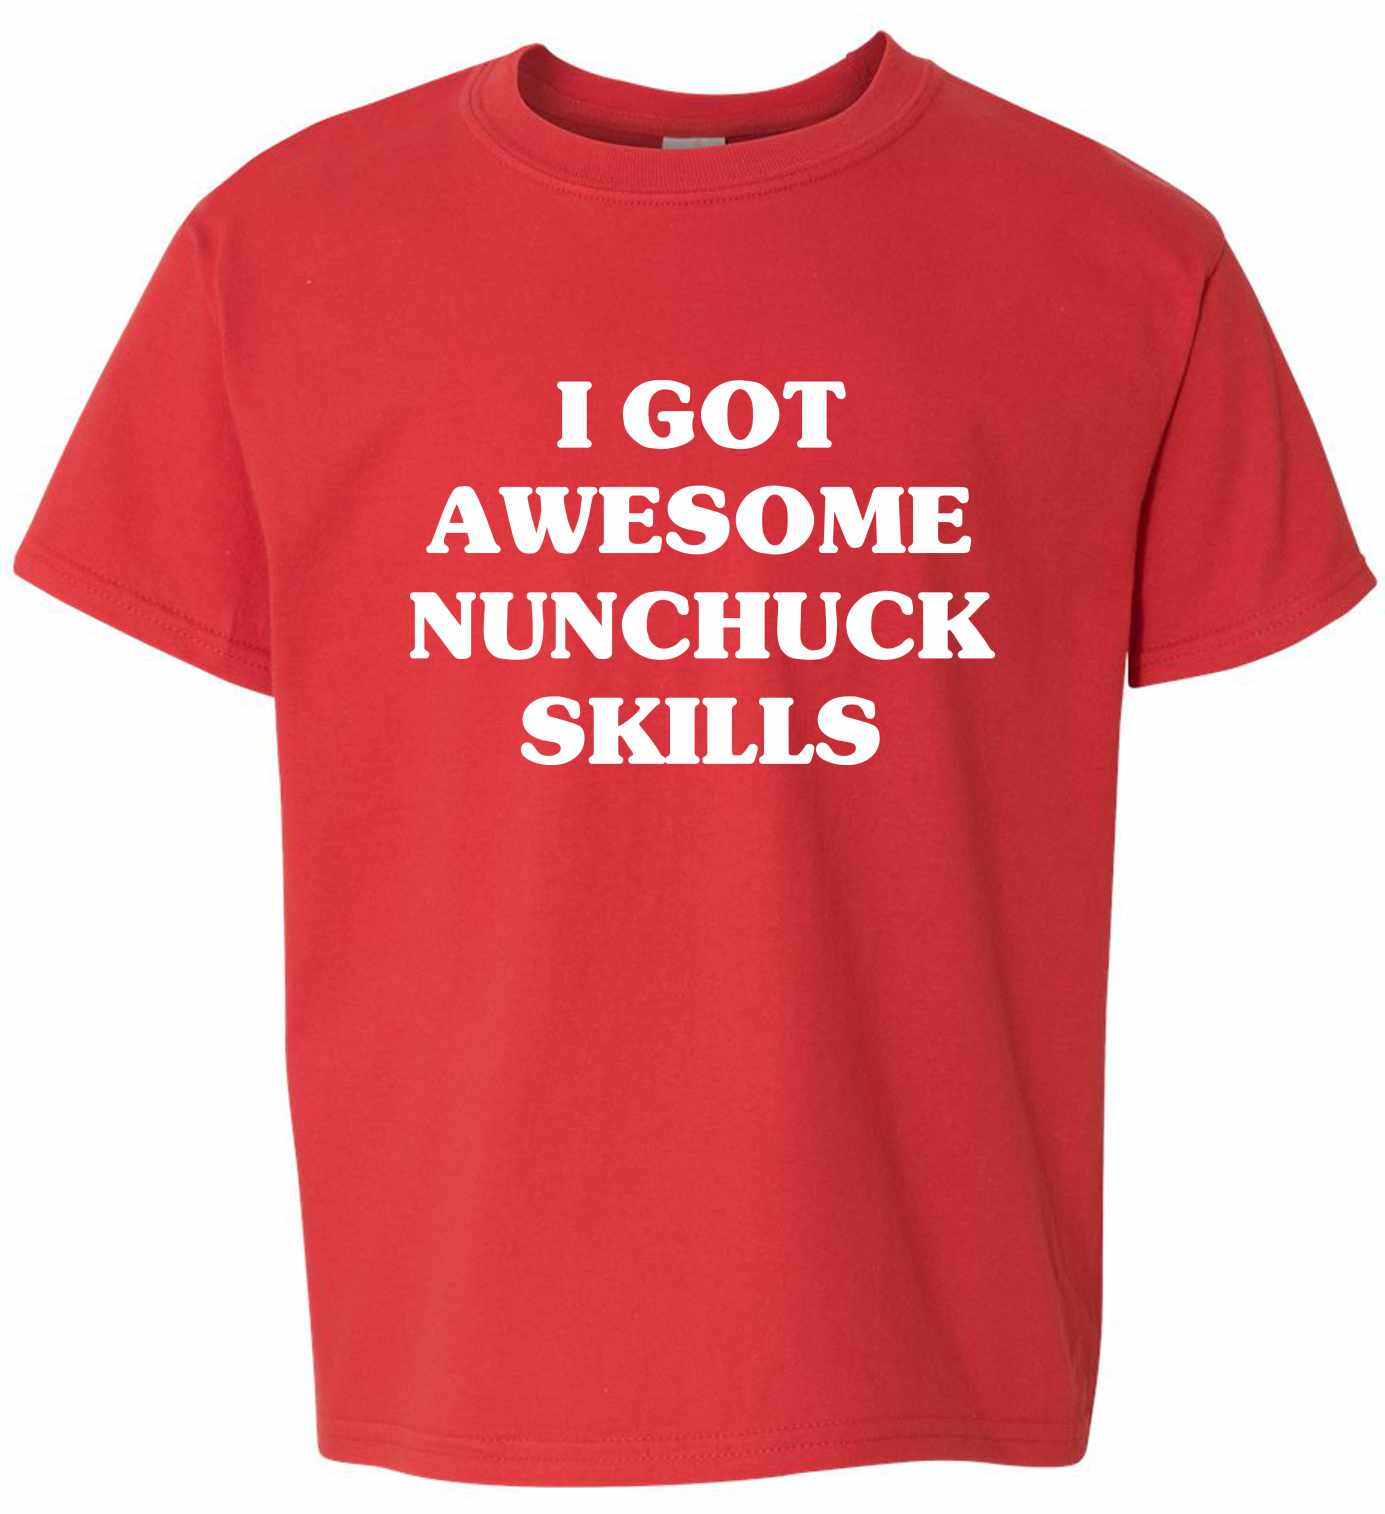 I GOT AWESOME NUNCHUCK SKILLS on Kids T-Shirt (#377-201)